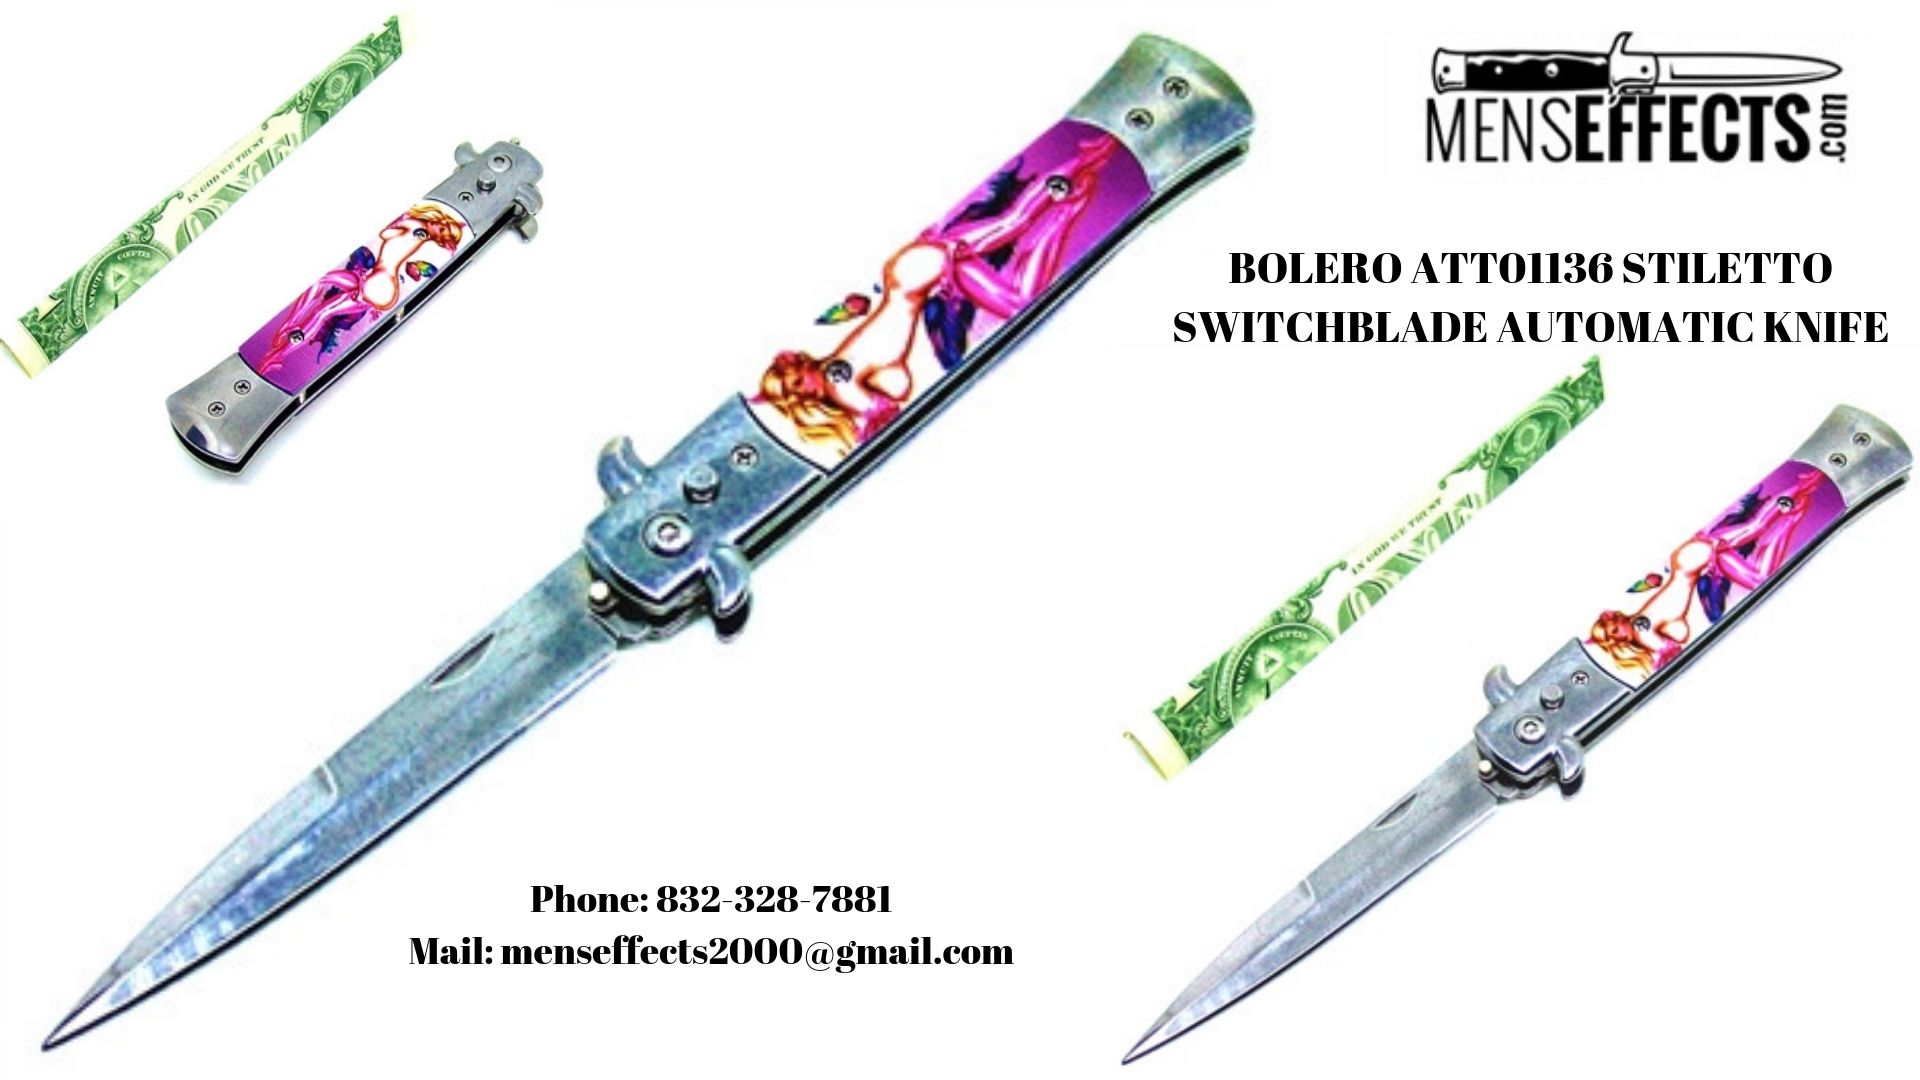 BOLERO ATT01136 STILETTO SWITCHBLADE AUTOMATIC KNIFE